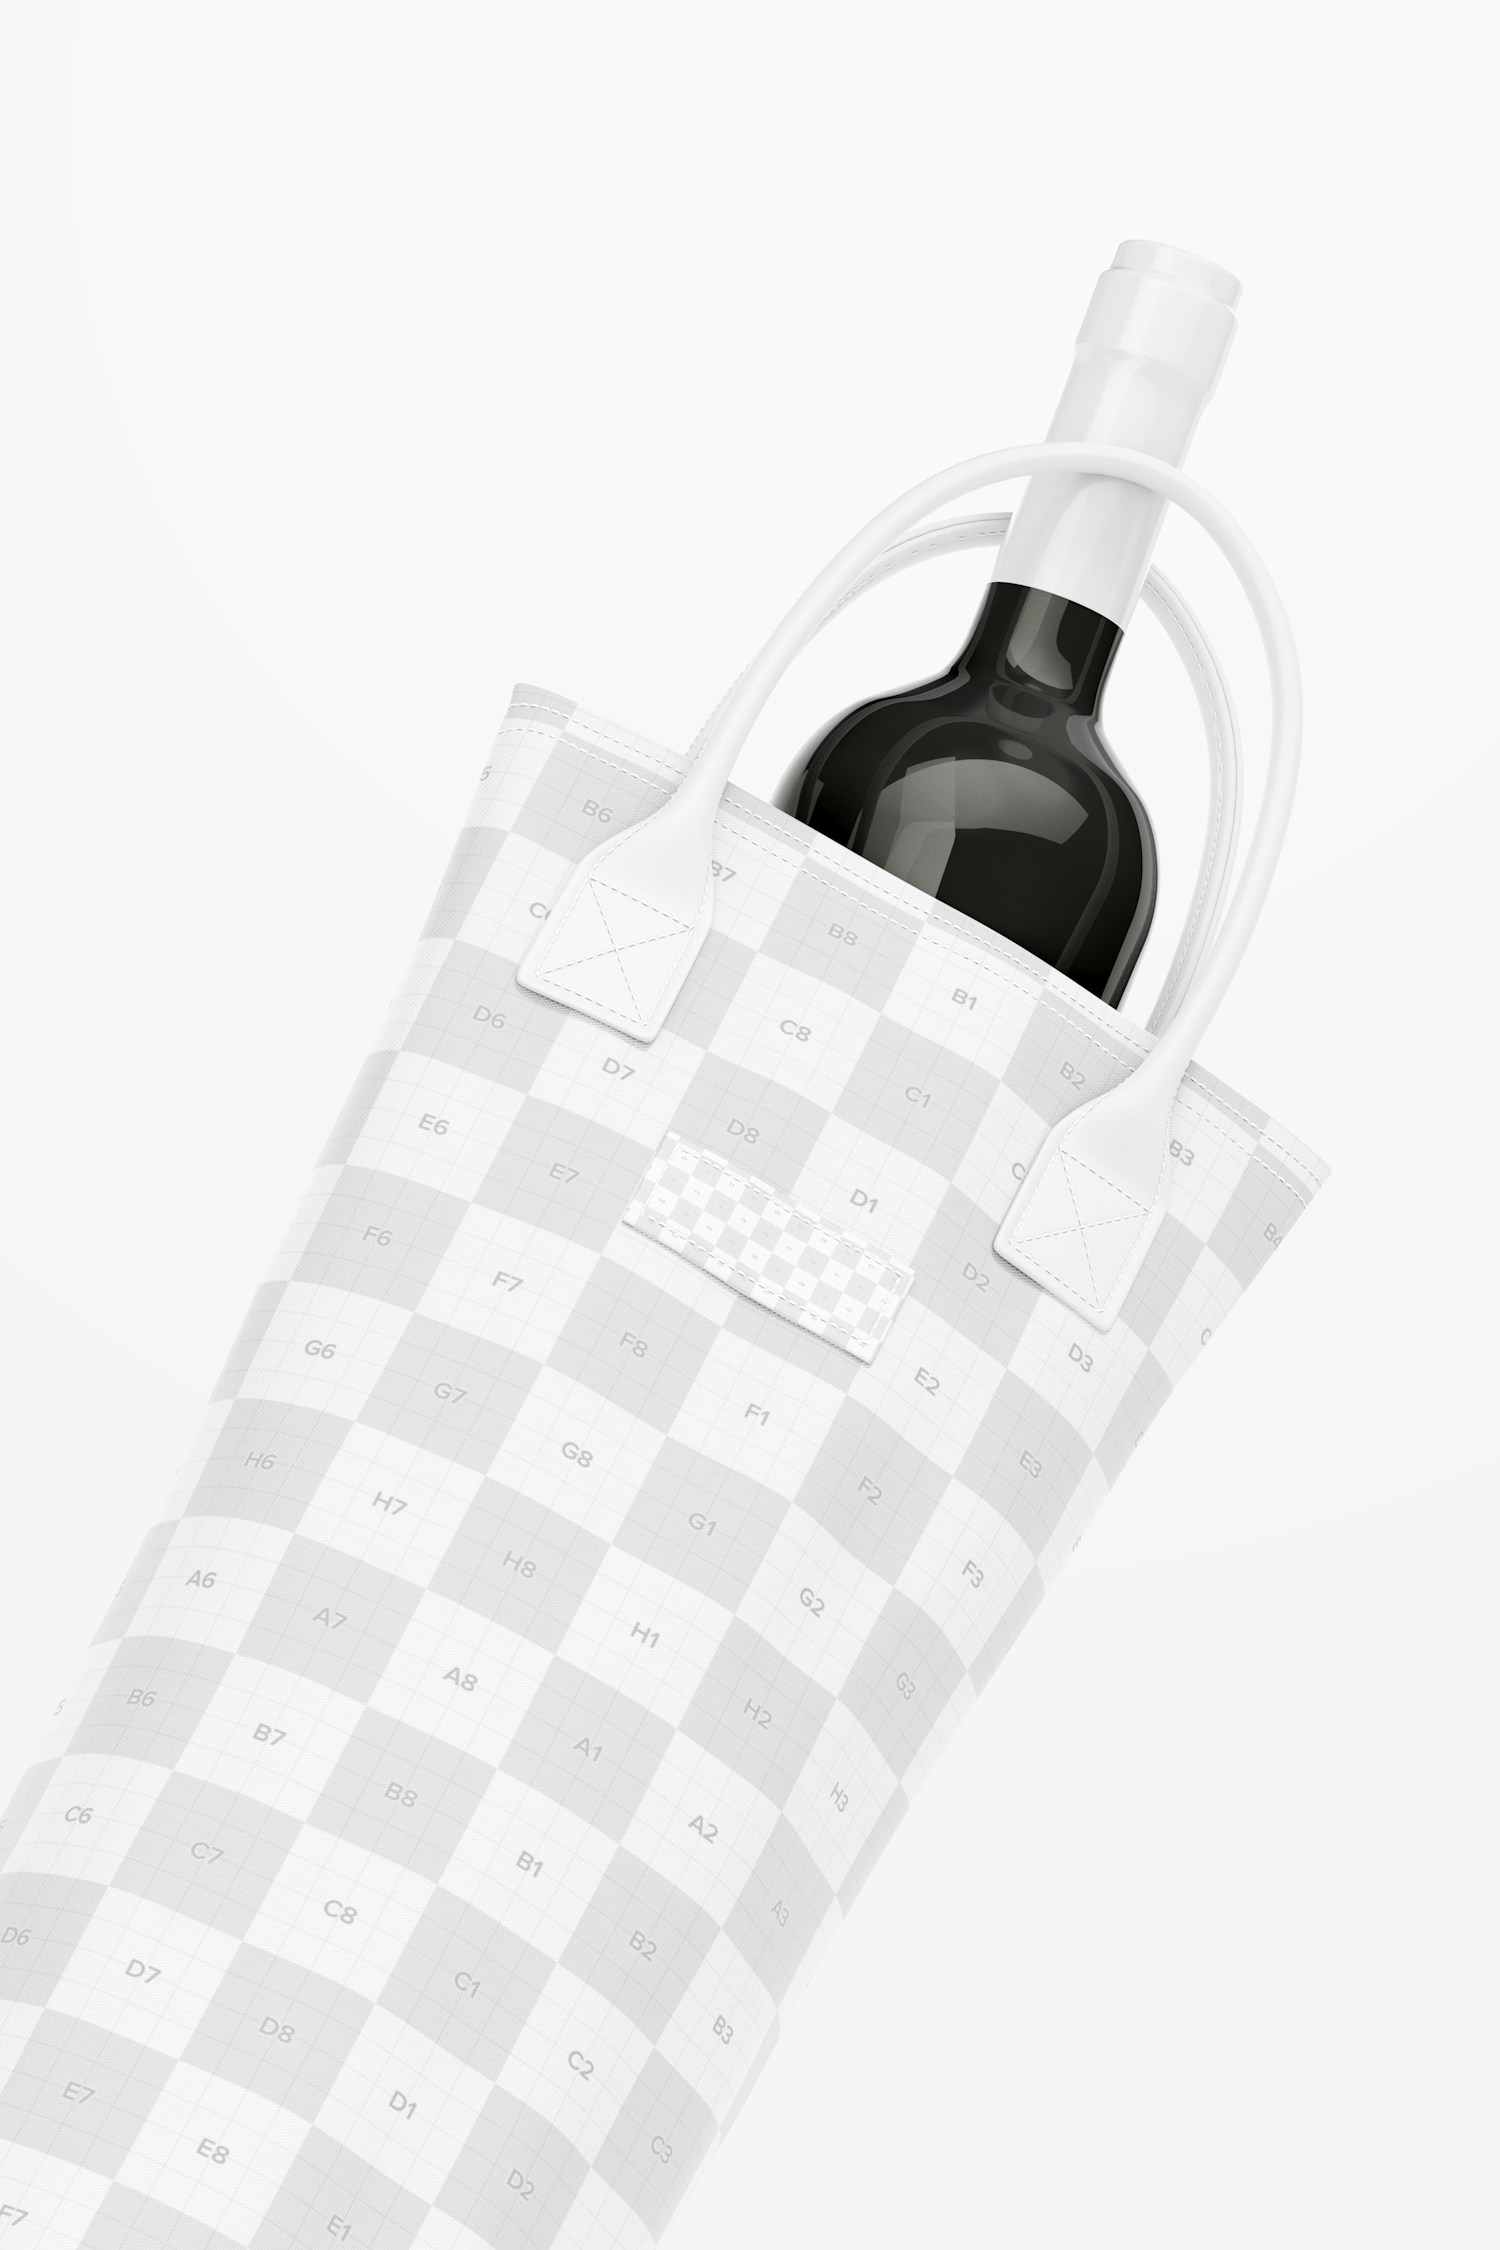 Wine Tote Bag Mockup, Close Up